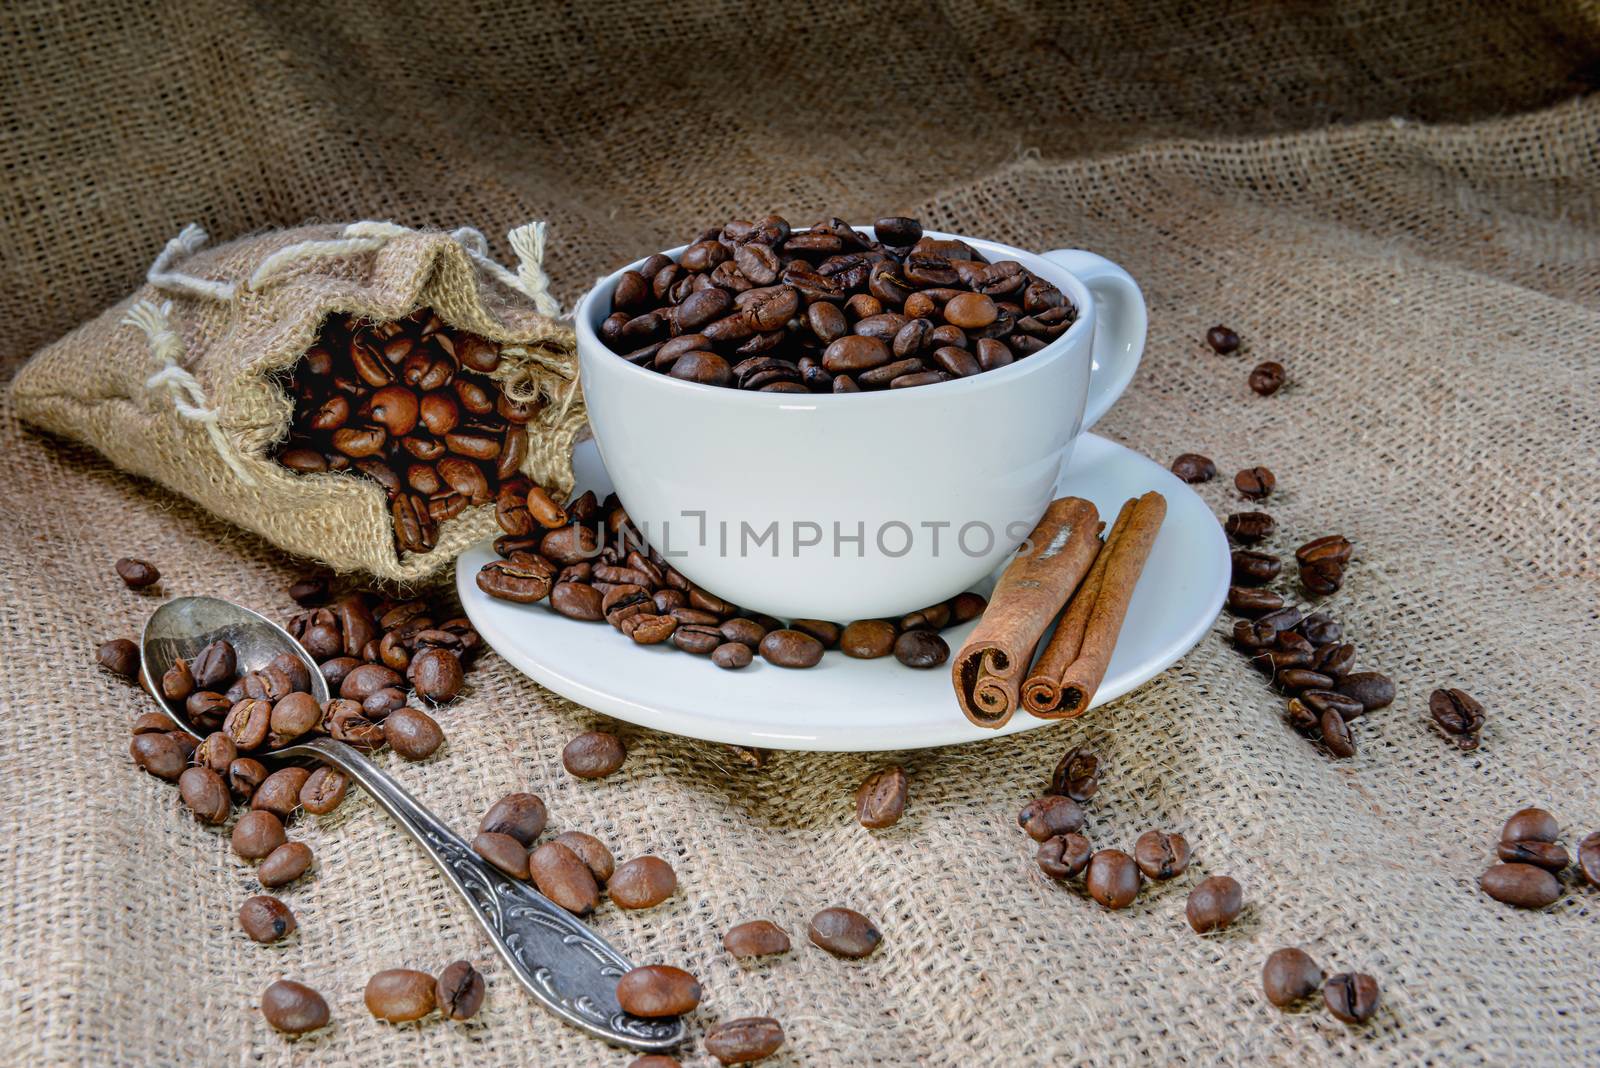 White coffee mug full of organic coffee beans and  cinnamon sticks on linen cloth - image